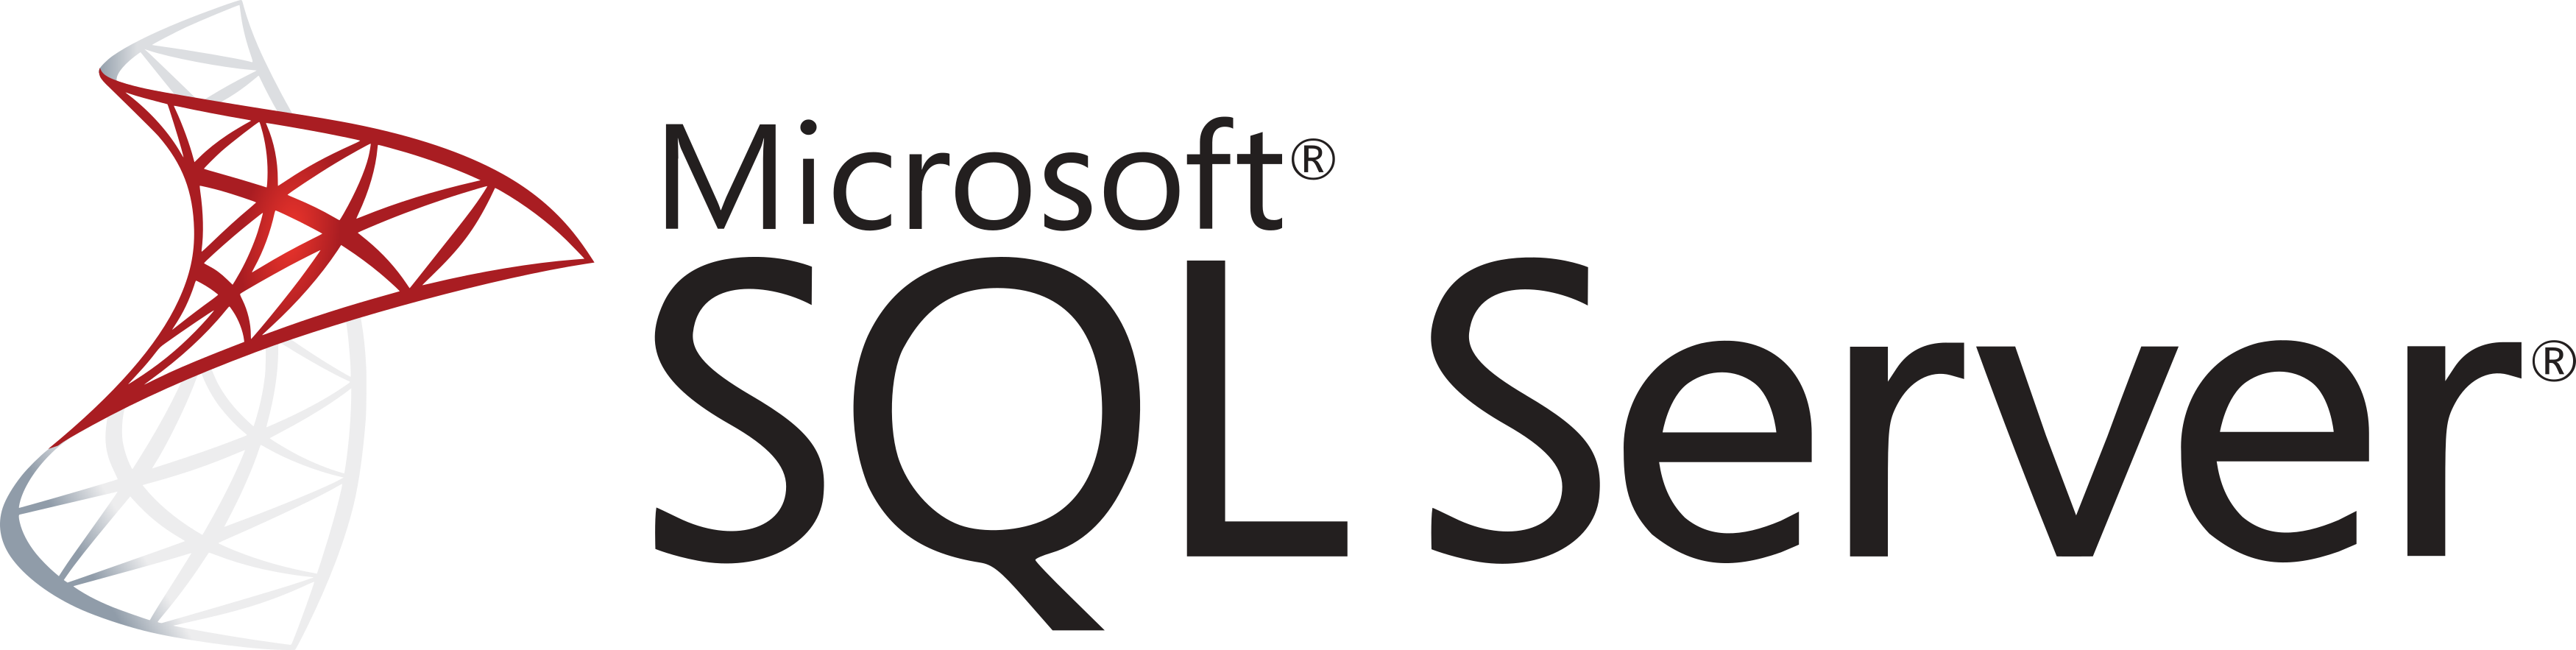 Microsoft Sql Server Logo Png E Vetor Download De Logo Images